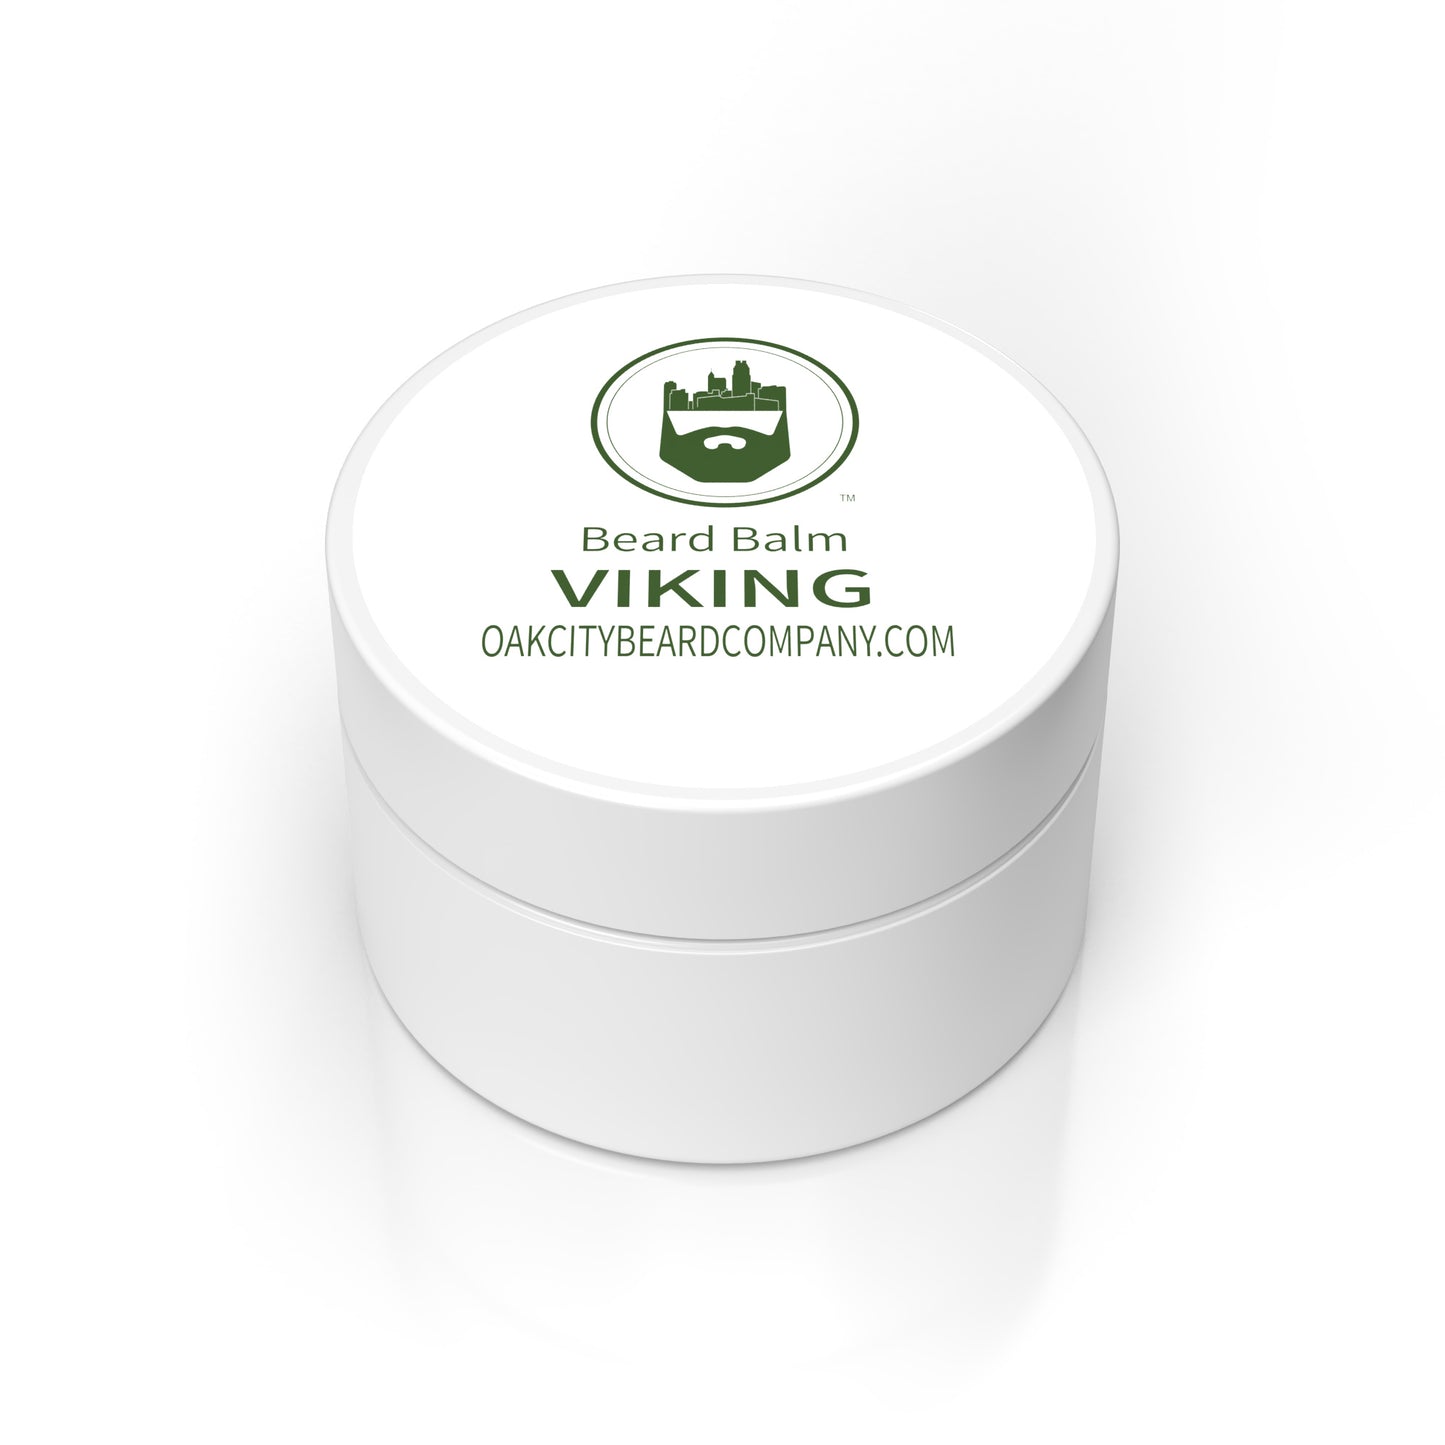 Viking (Beard Balm) by Oak City Beard Company